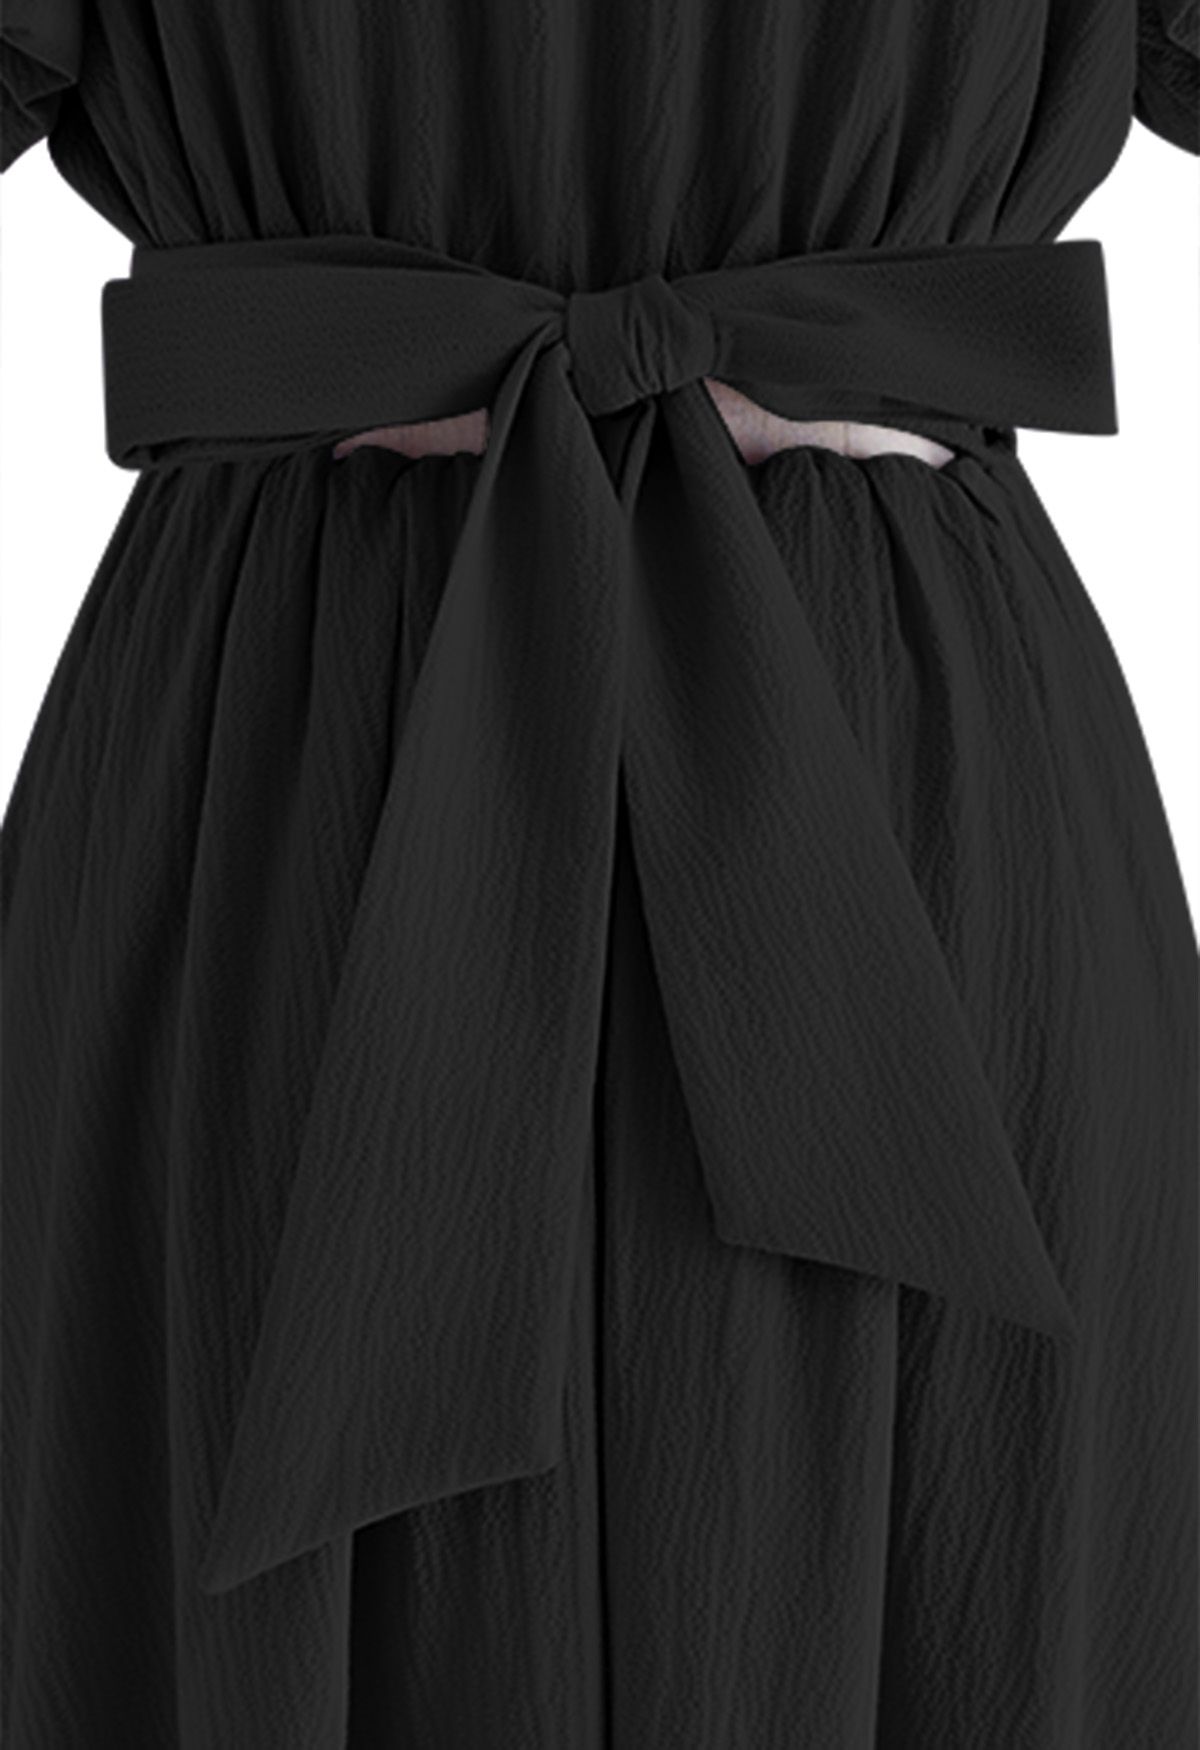 Twist V-Neck Crop Top and Maxi Skirt Set in Black